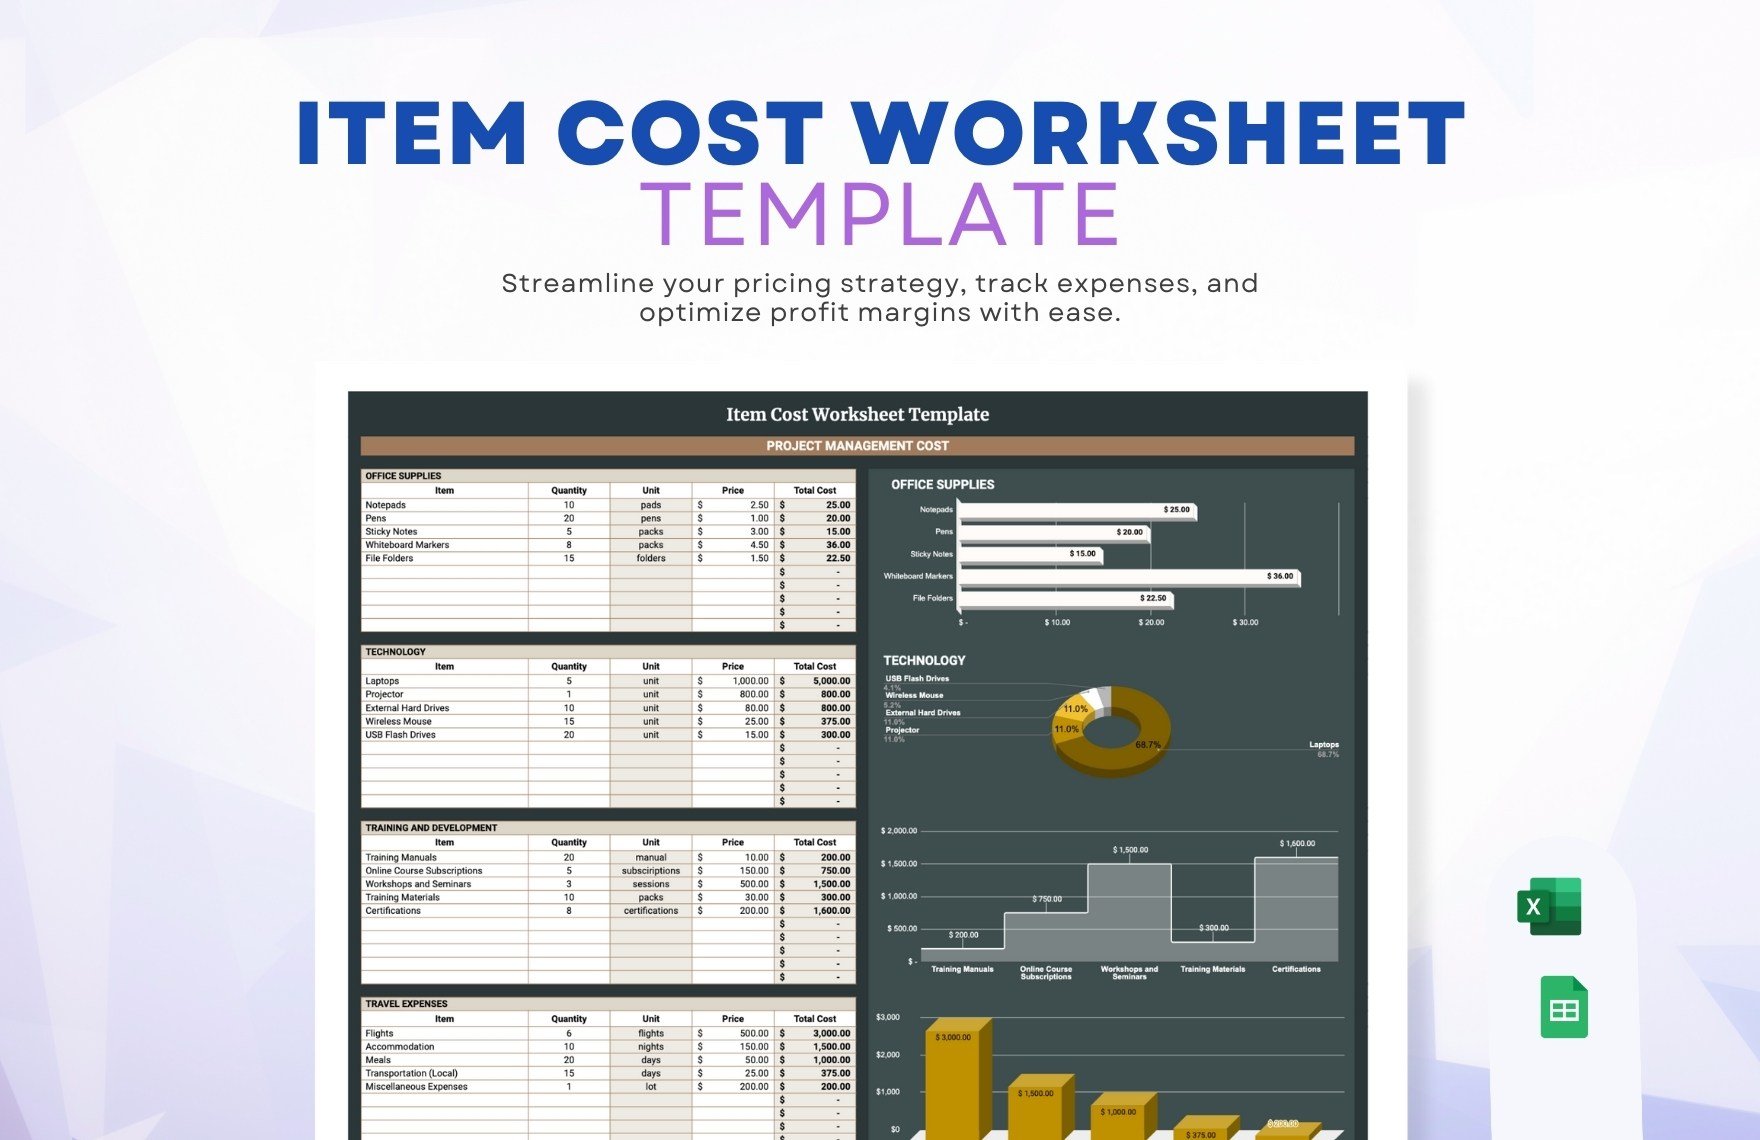 Item Cost Worksheet Template